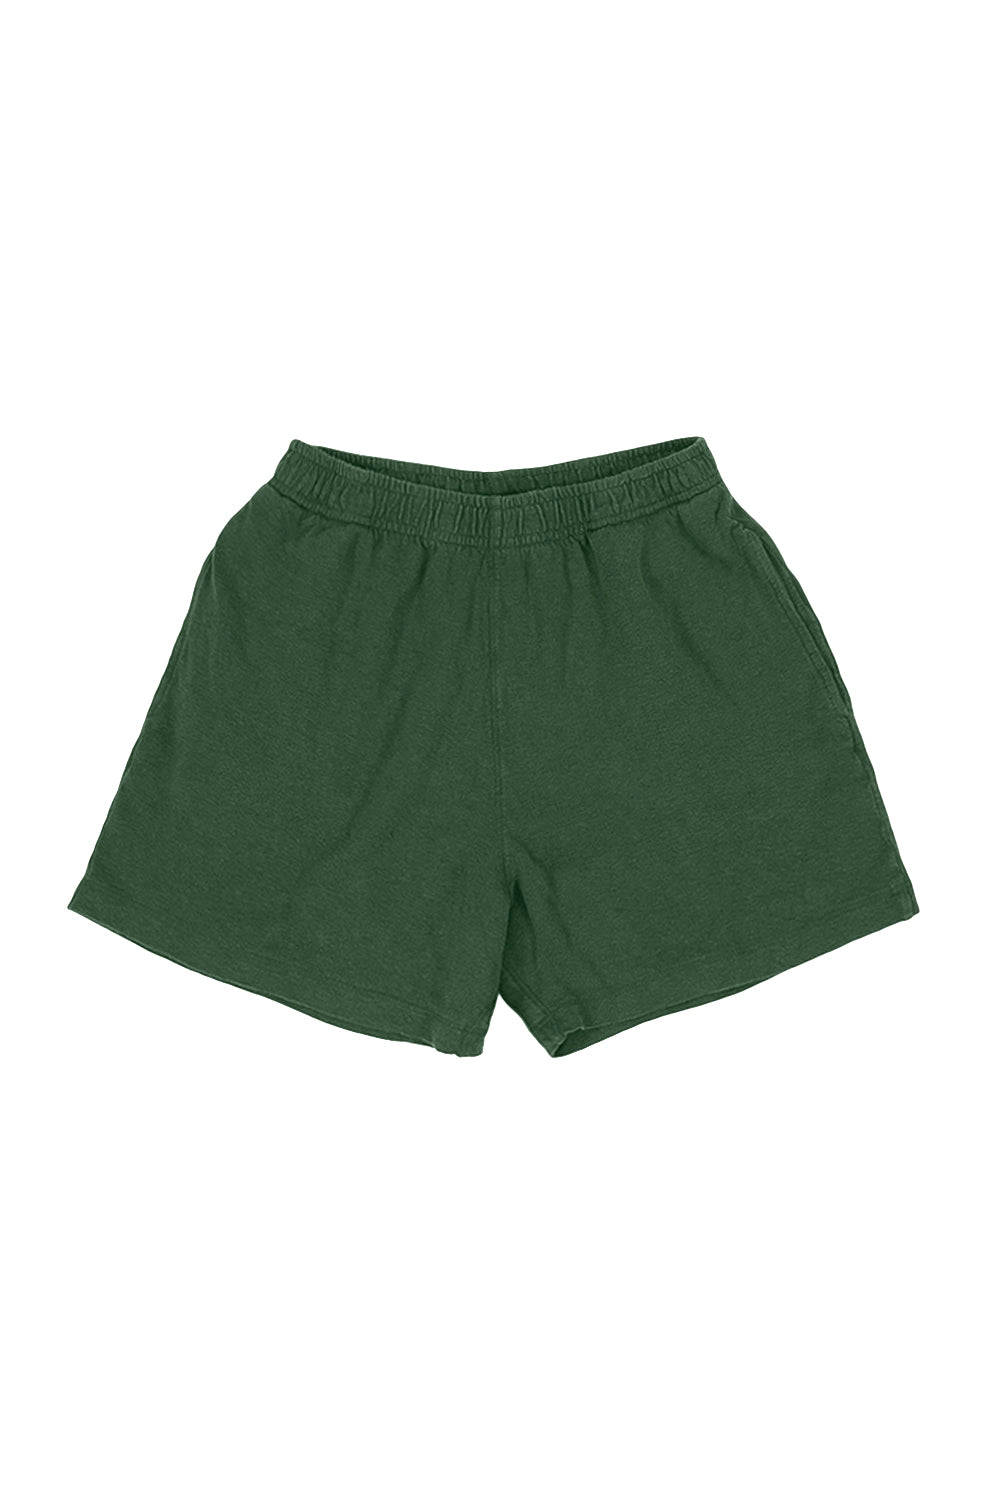 Kona 100% Hemp Short | Jungmaven Hemp Clothing & Accessories / Color: Hunter Green